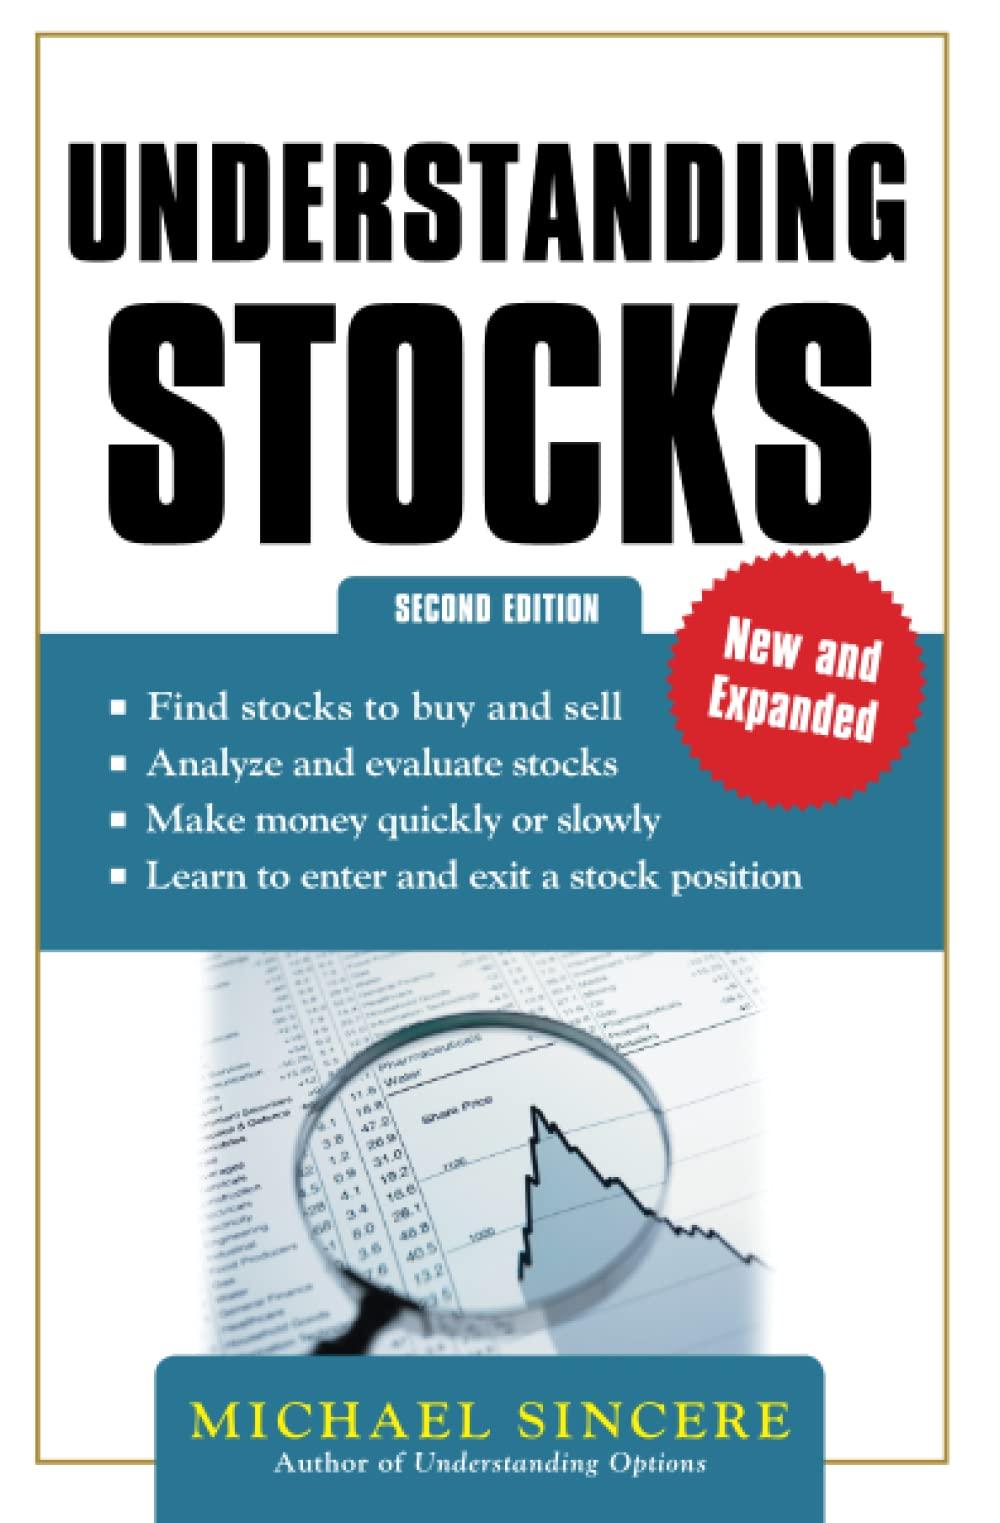 understanding stocks 2nd edition michael sincere 0071830332, 978-0071830331